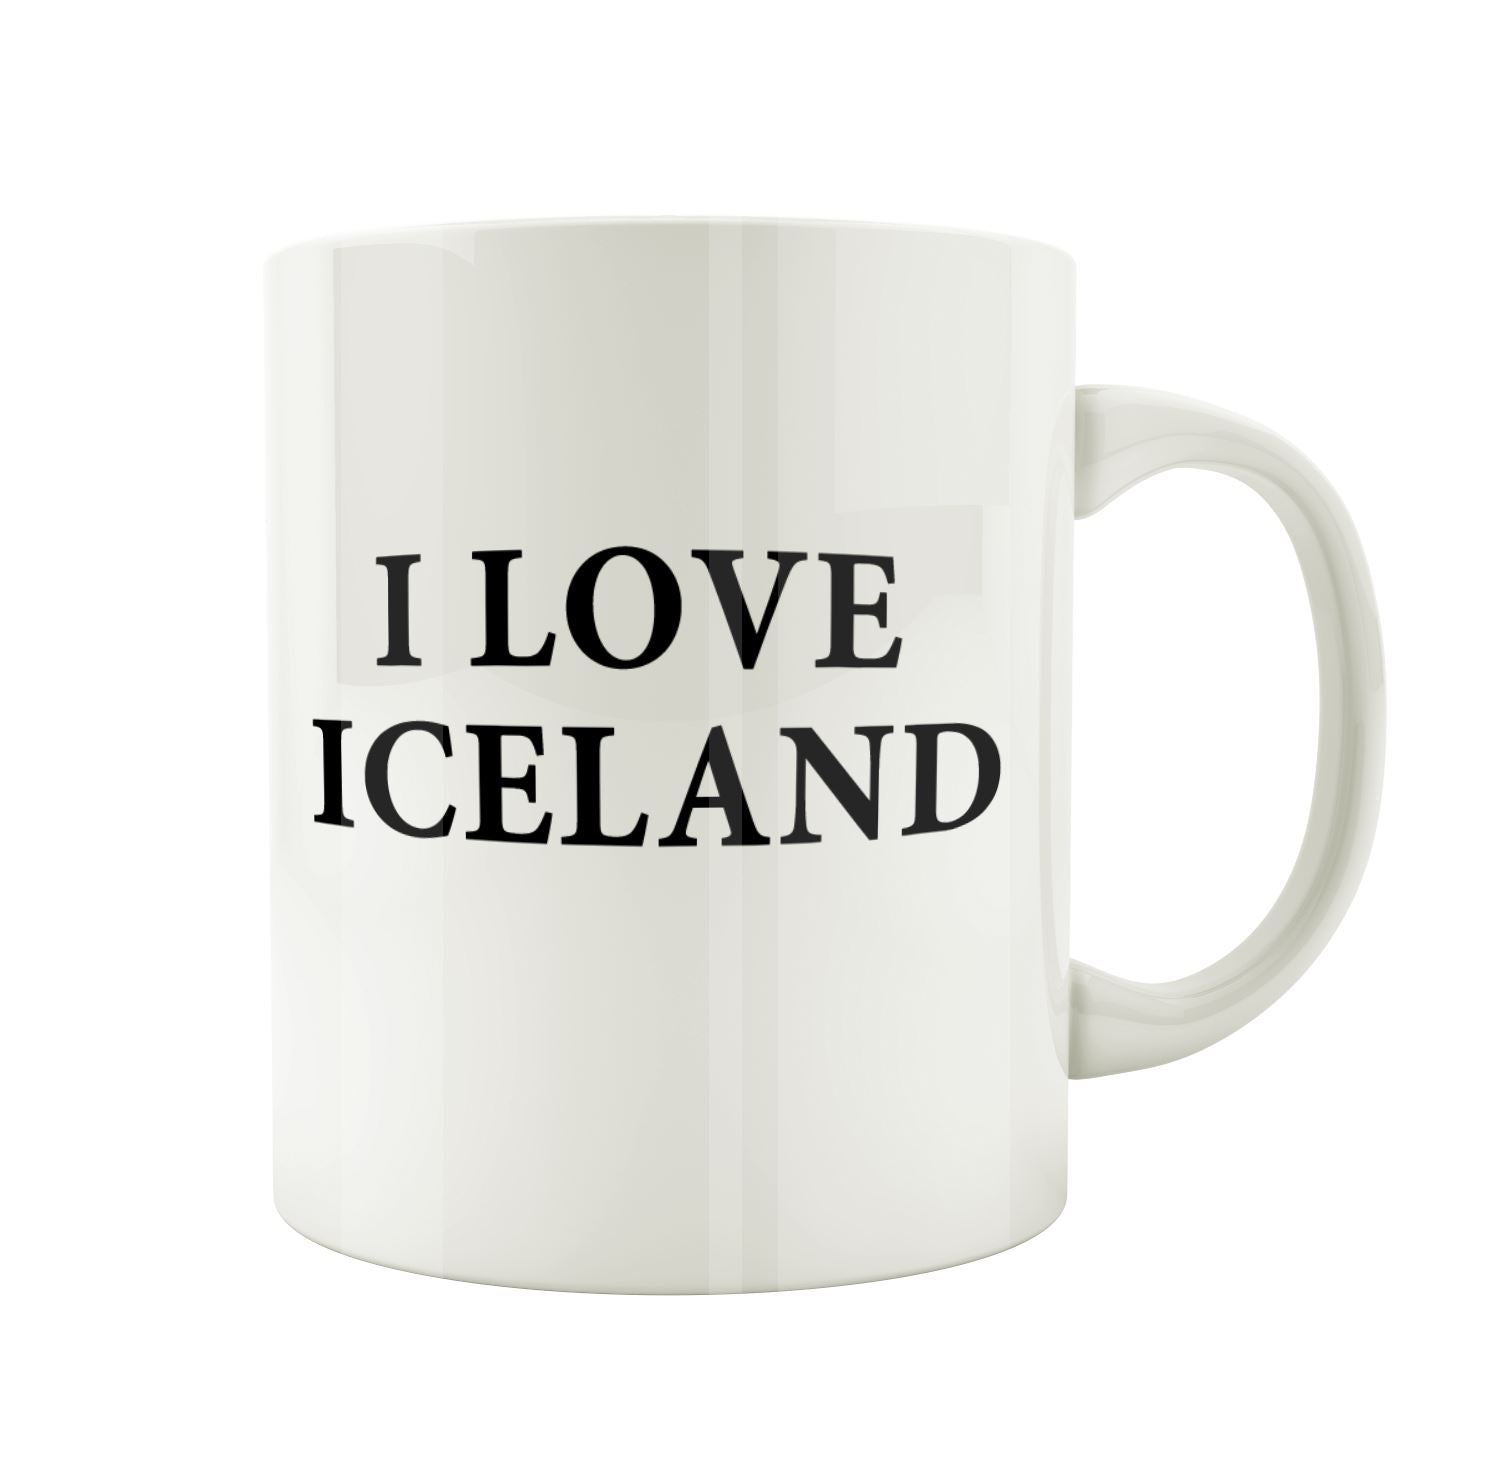 I LOVE ICELAND